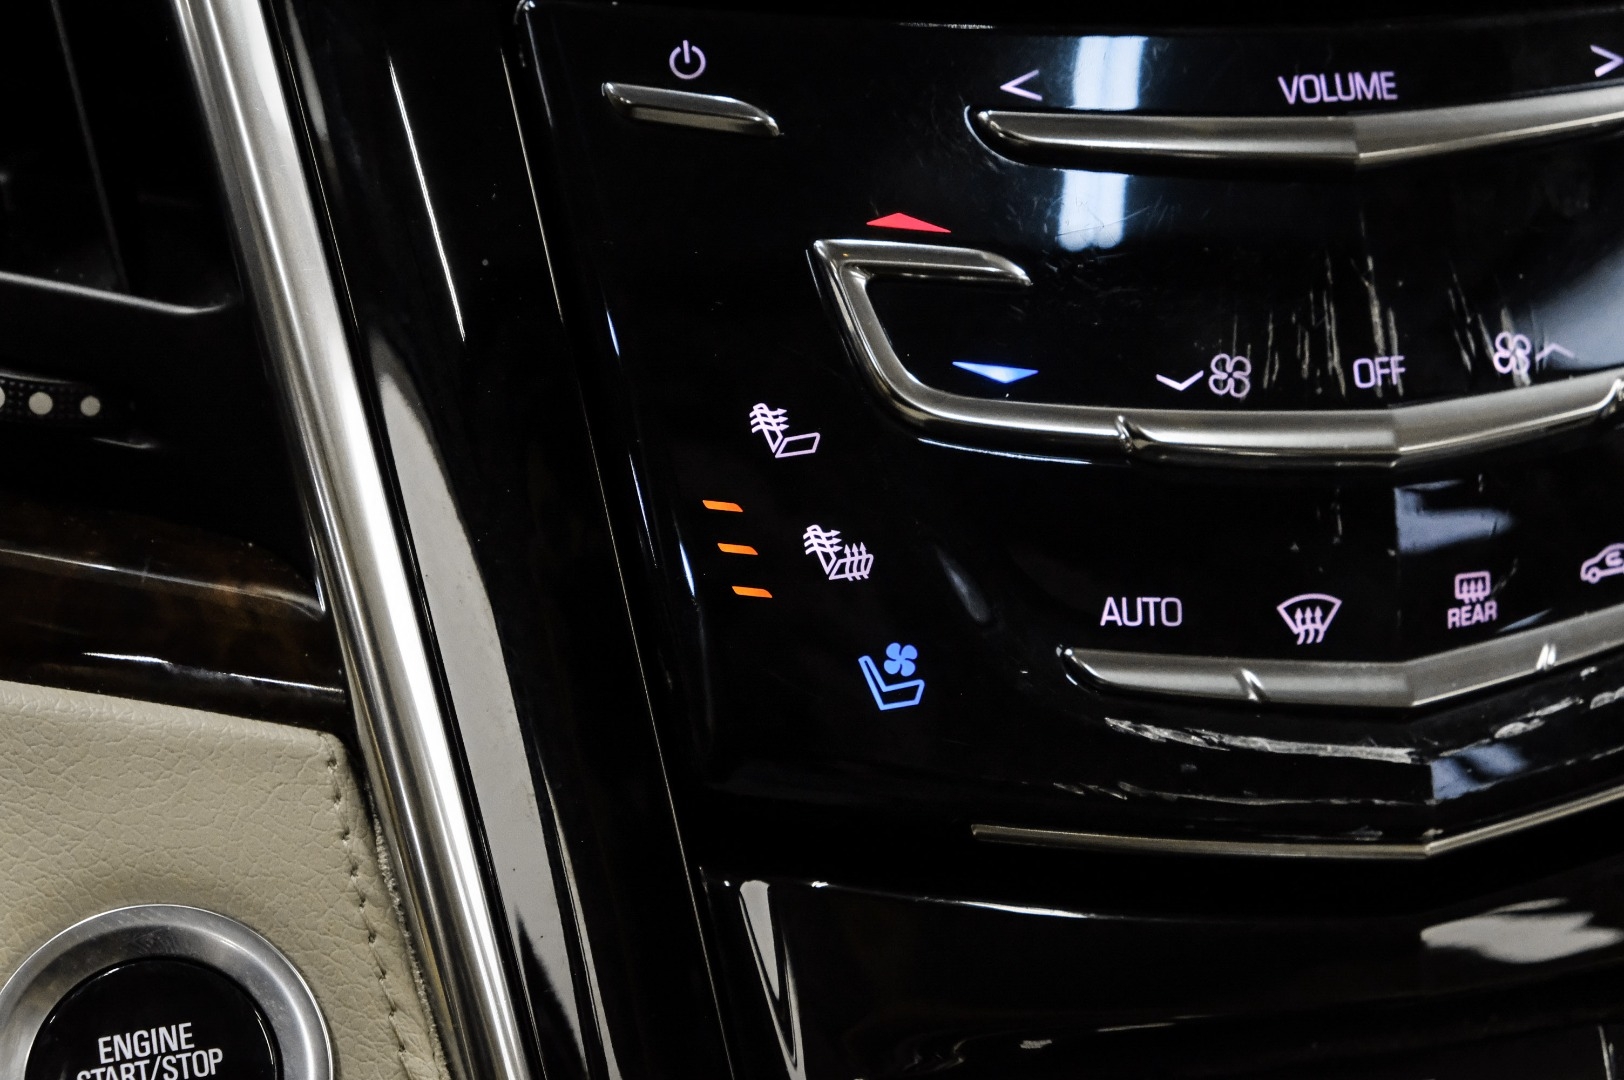 2015 Cadillac Escalade 2WD 4dr Luxury 22